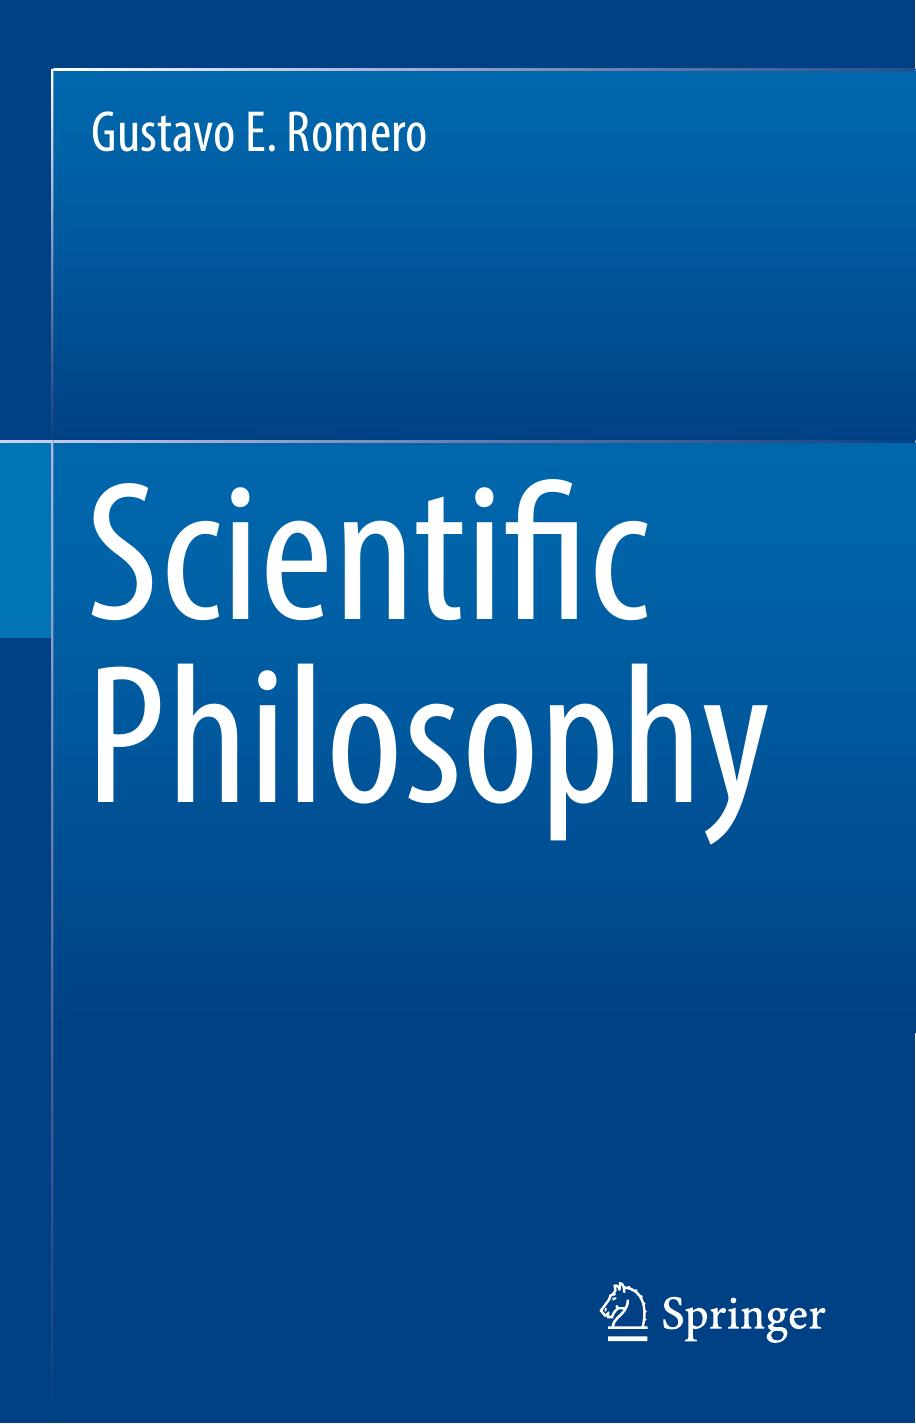 Scientific Philosophy by Gustavo E. Romero